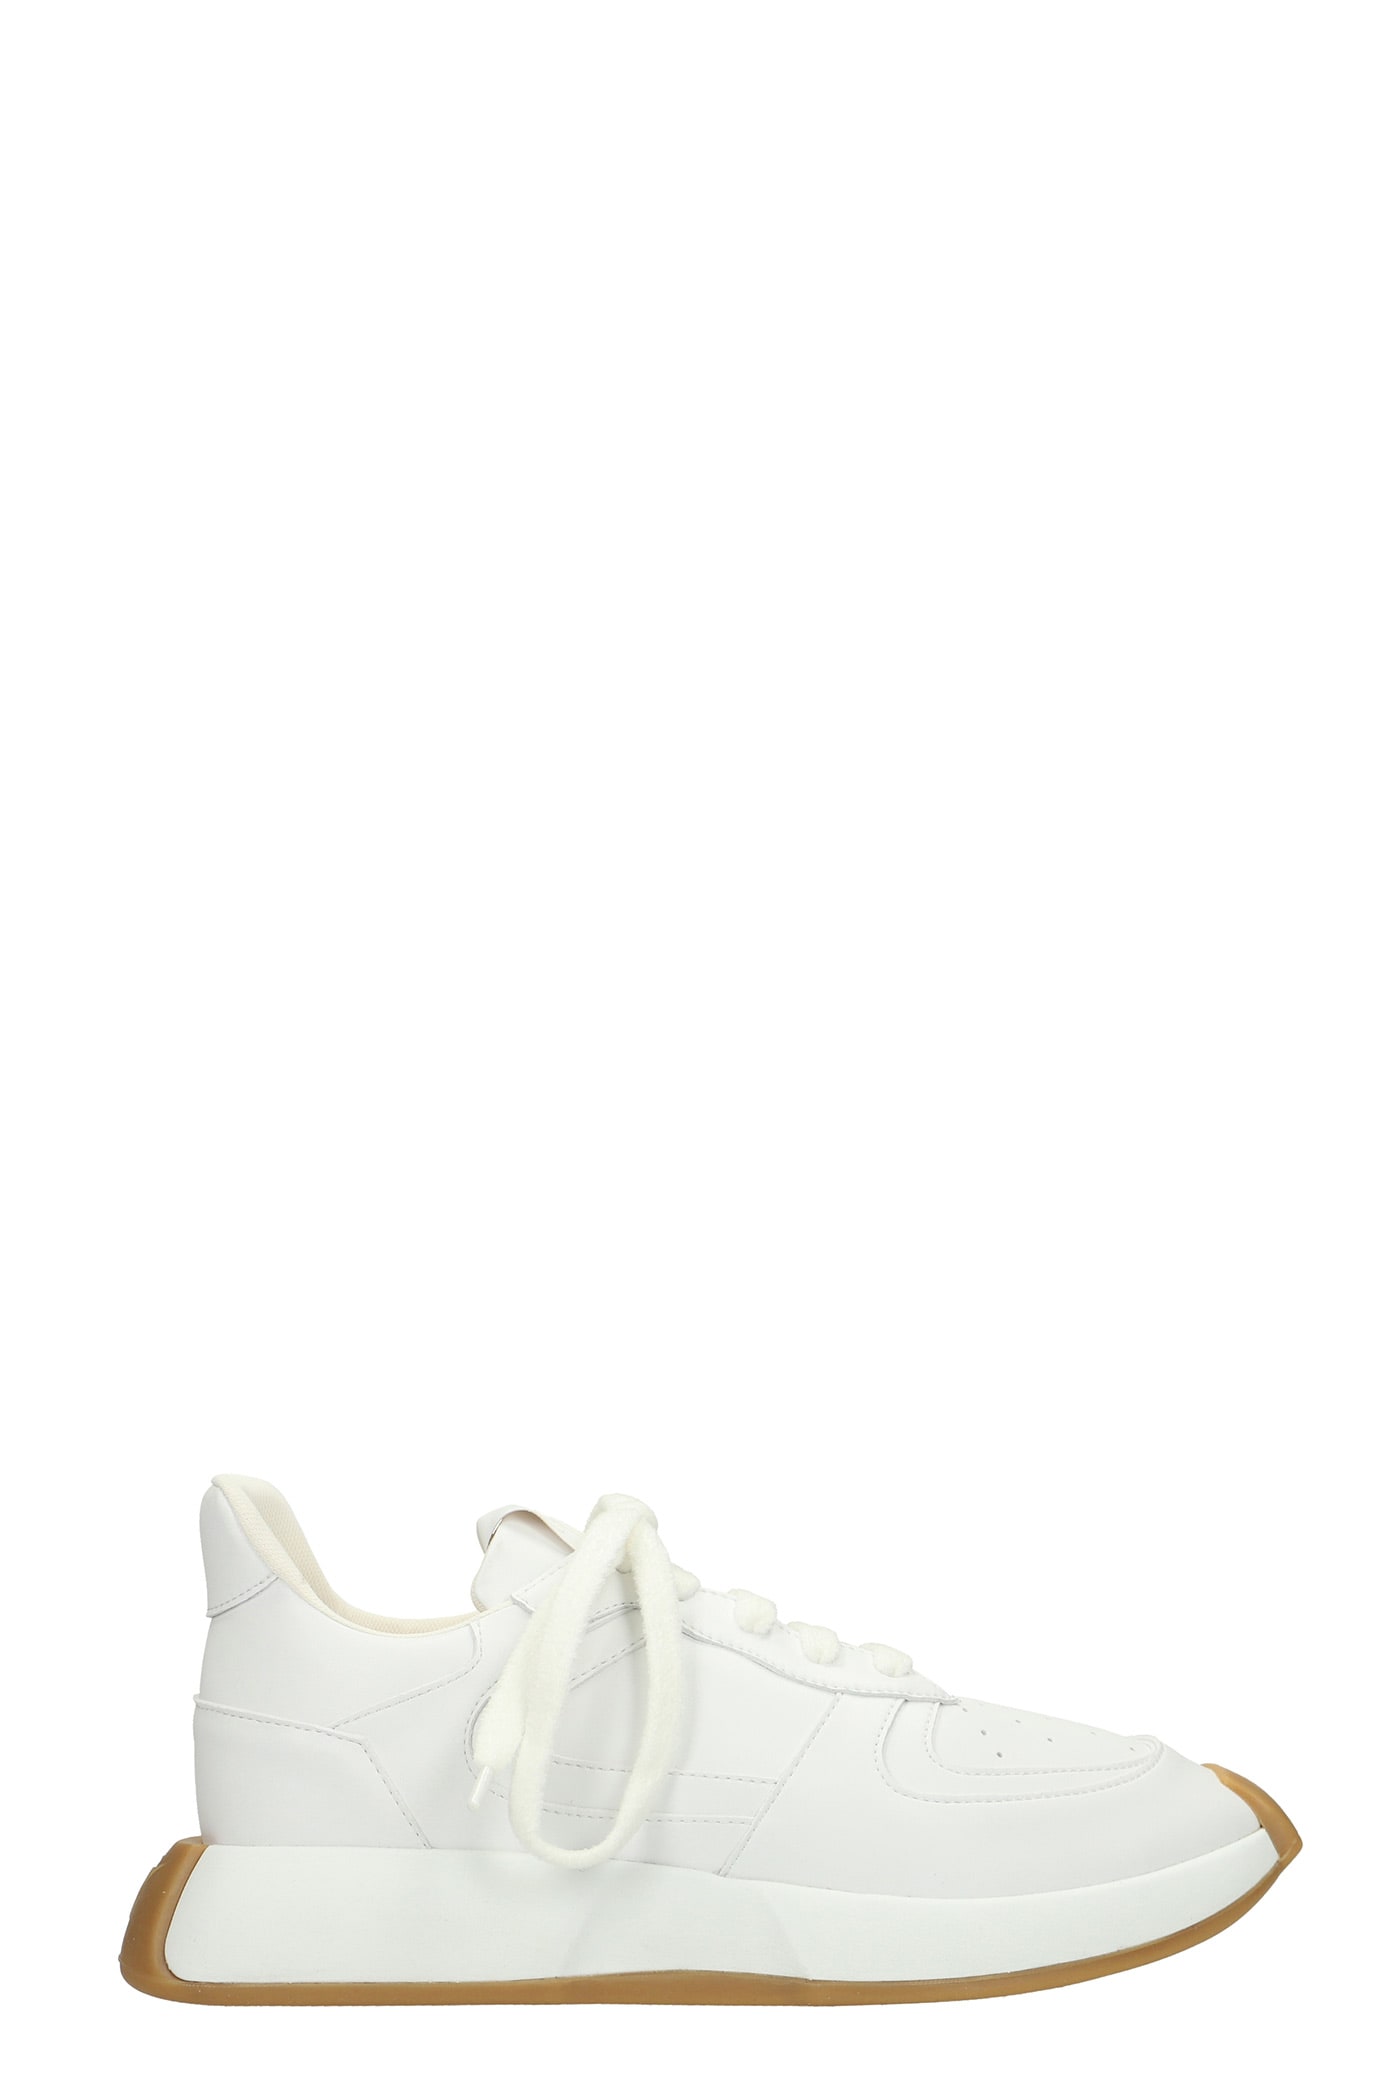 Giuseppe Zanotti Ferox Sneakers In White Leather